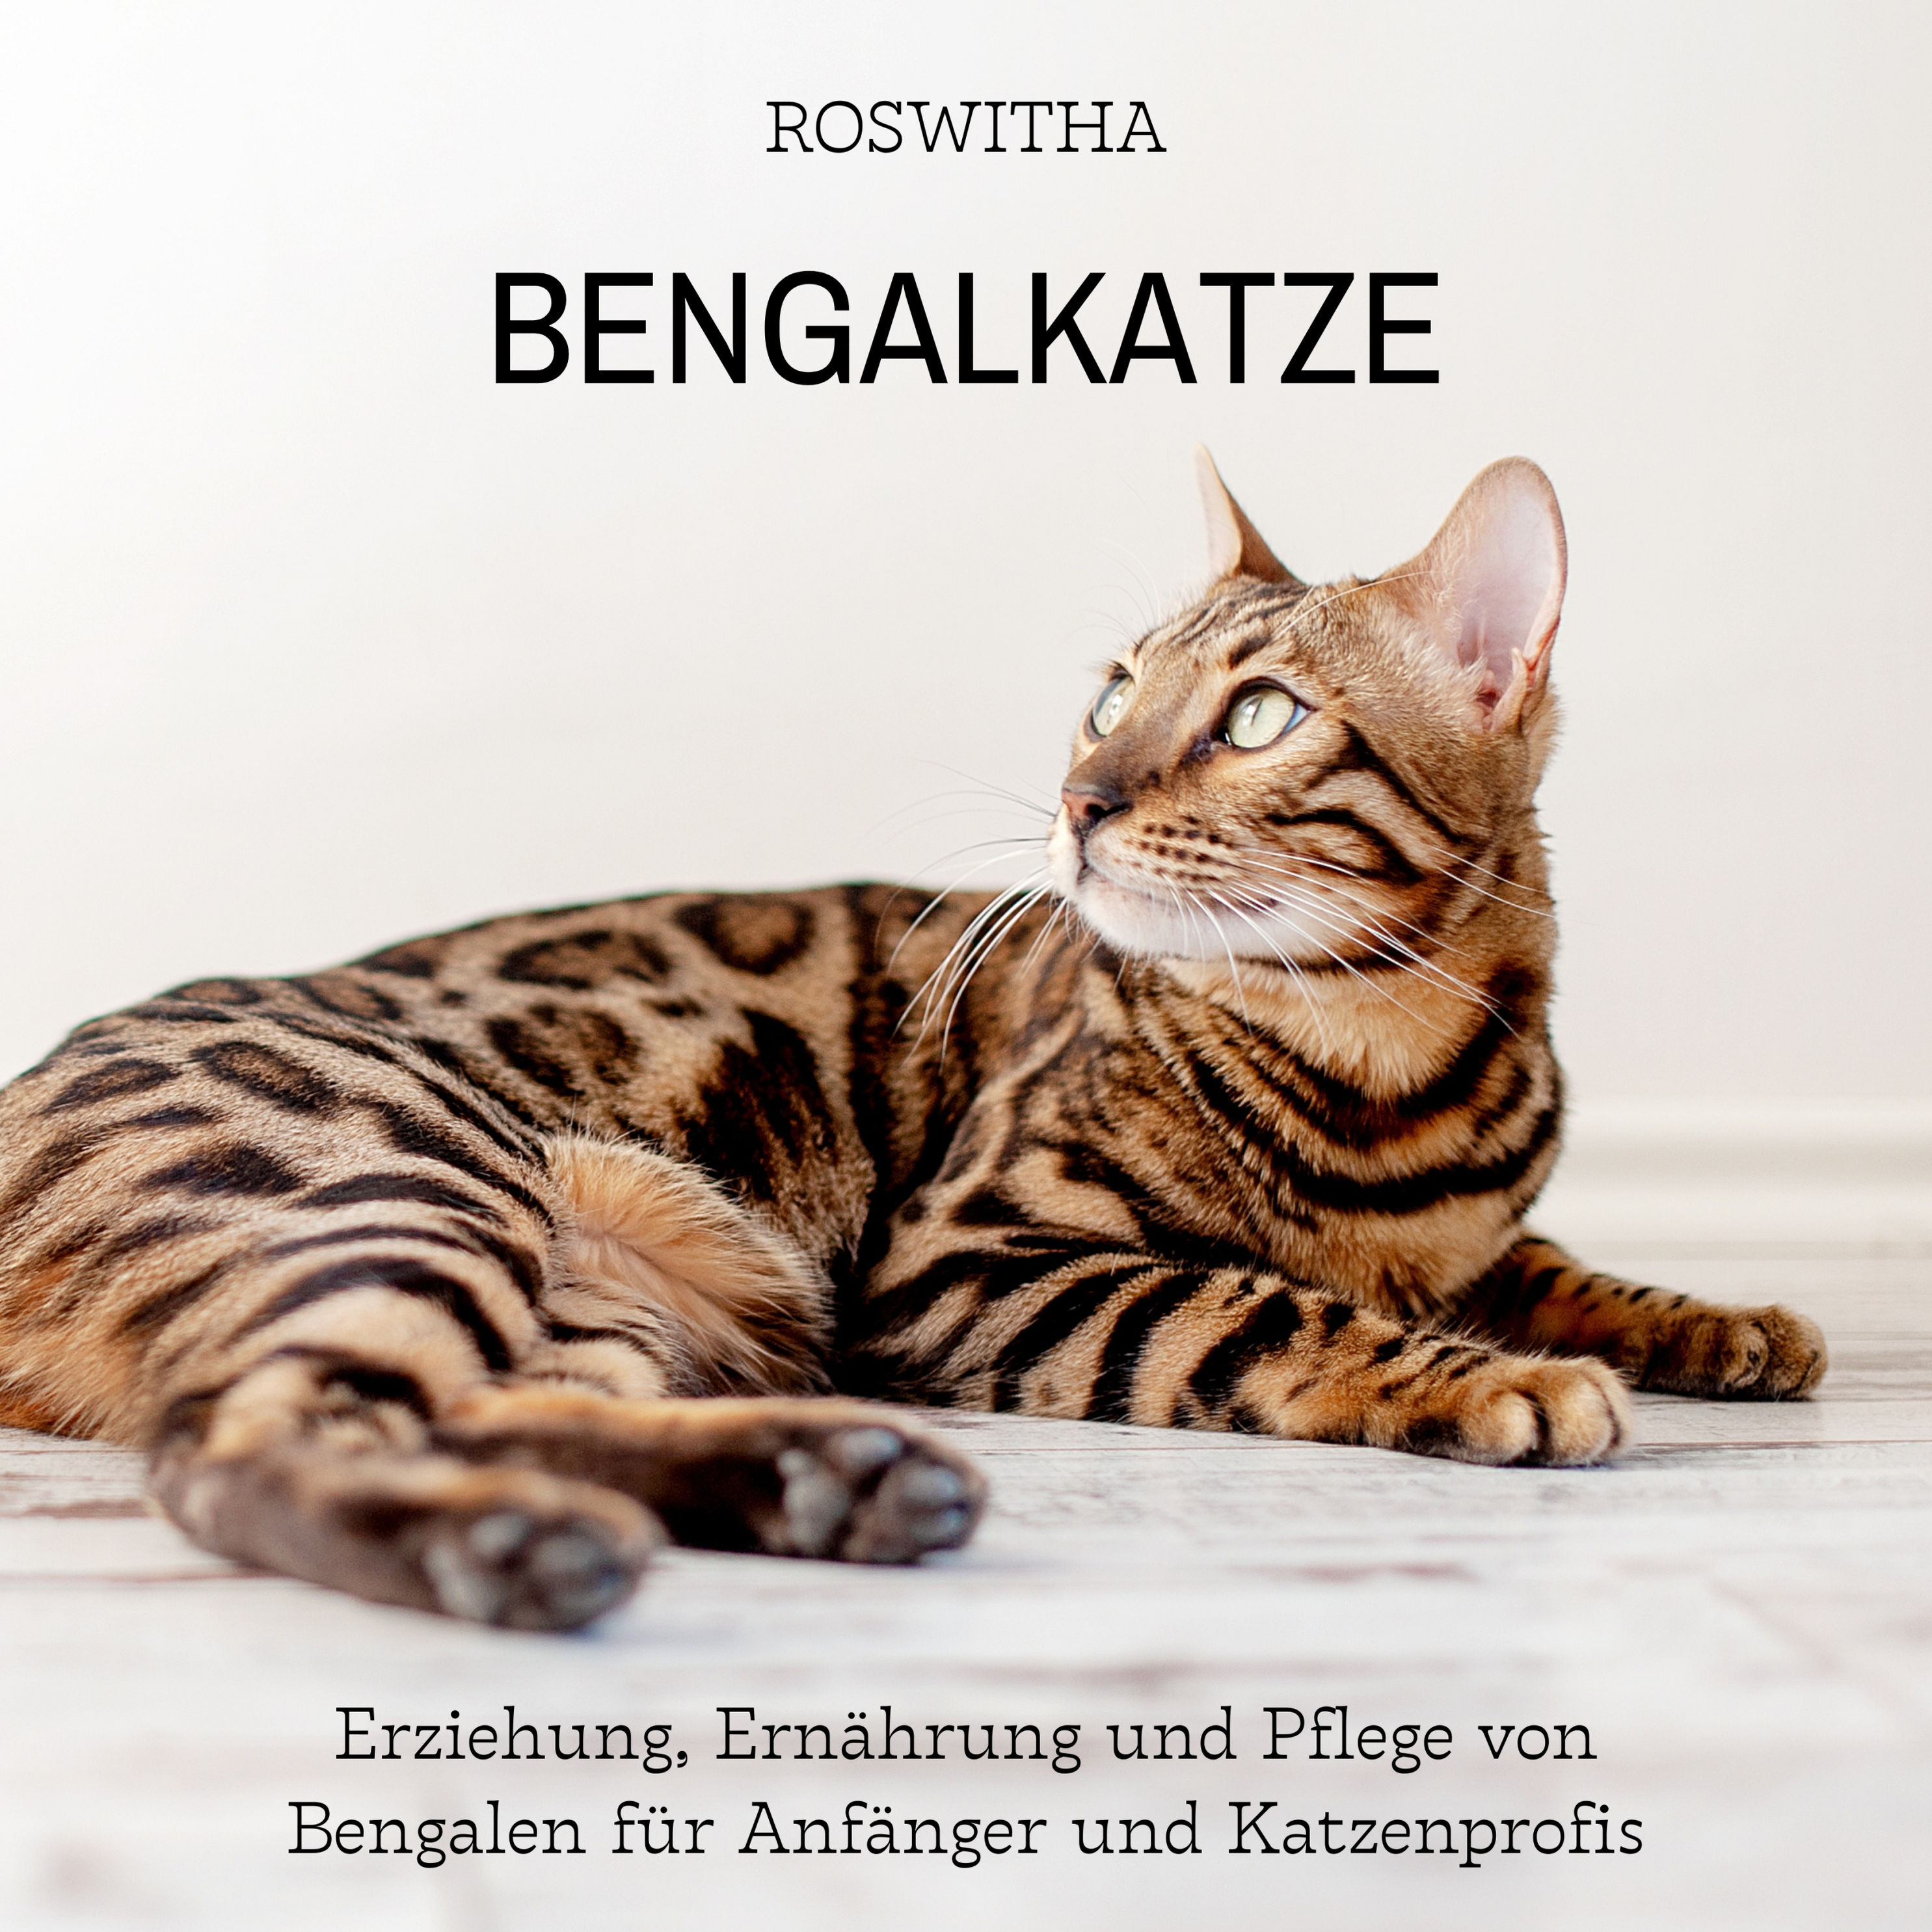 Bengalkatze Hörbuch sicher downloaden - jetzt bei Weltbild.de!